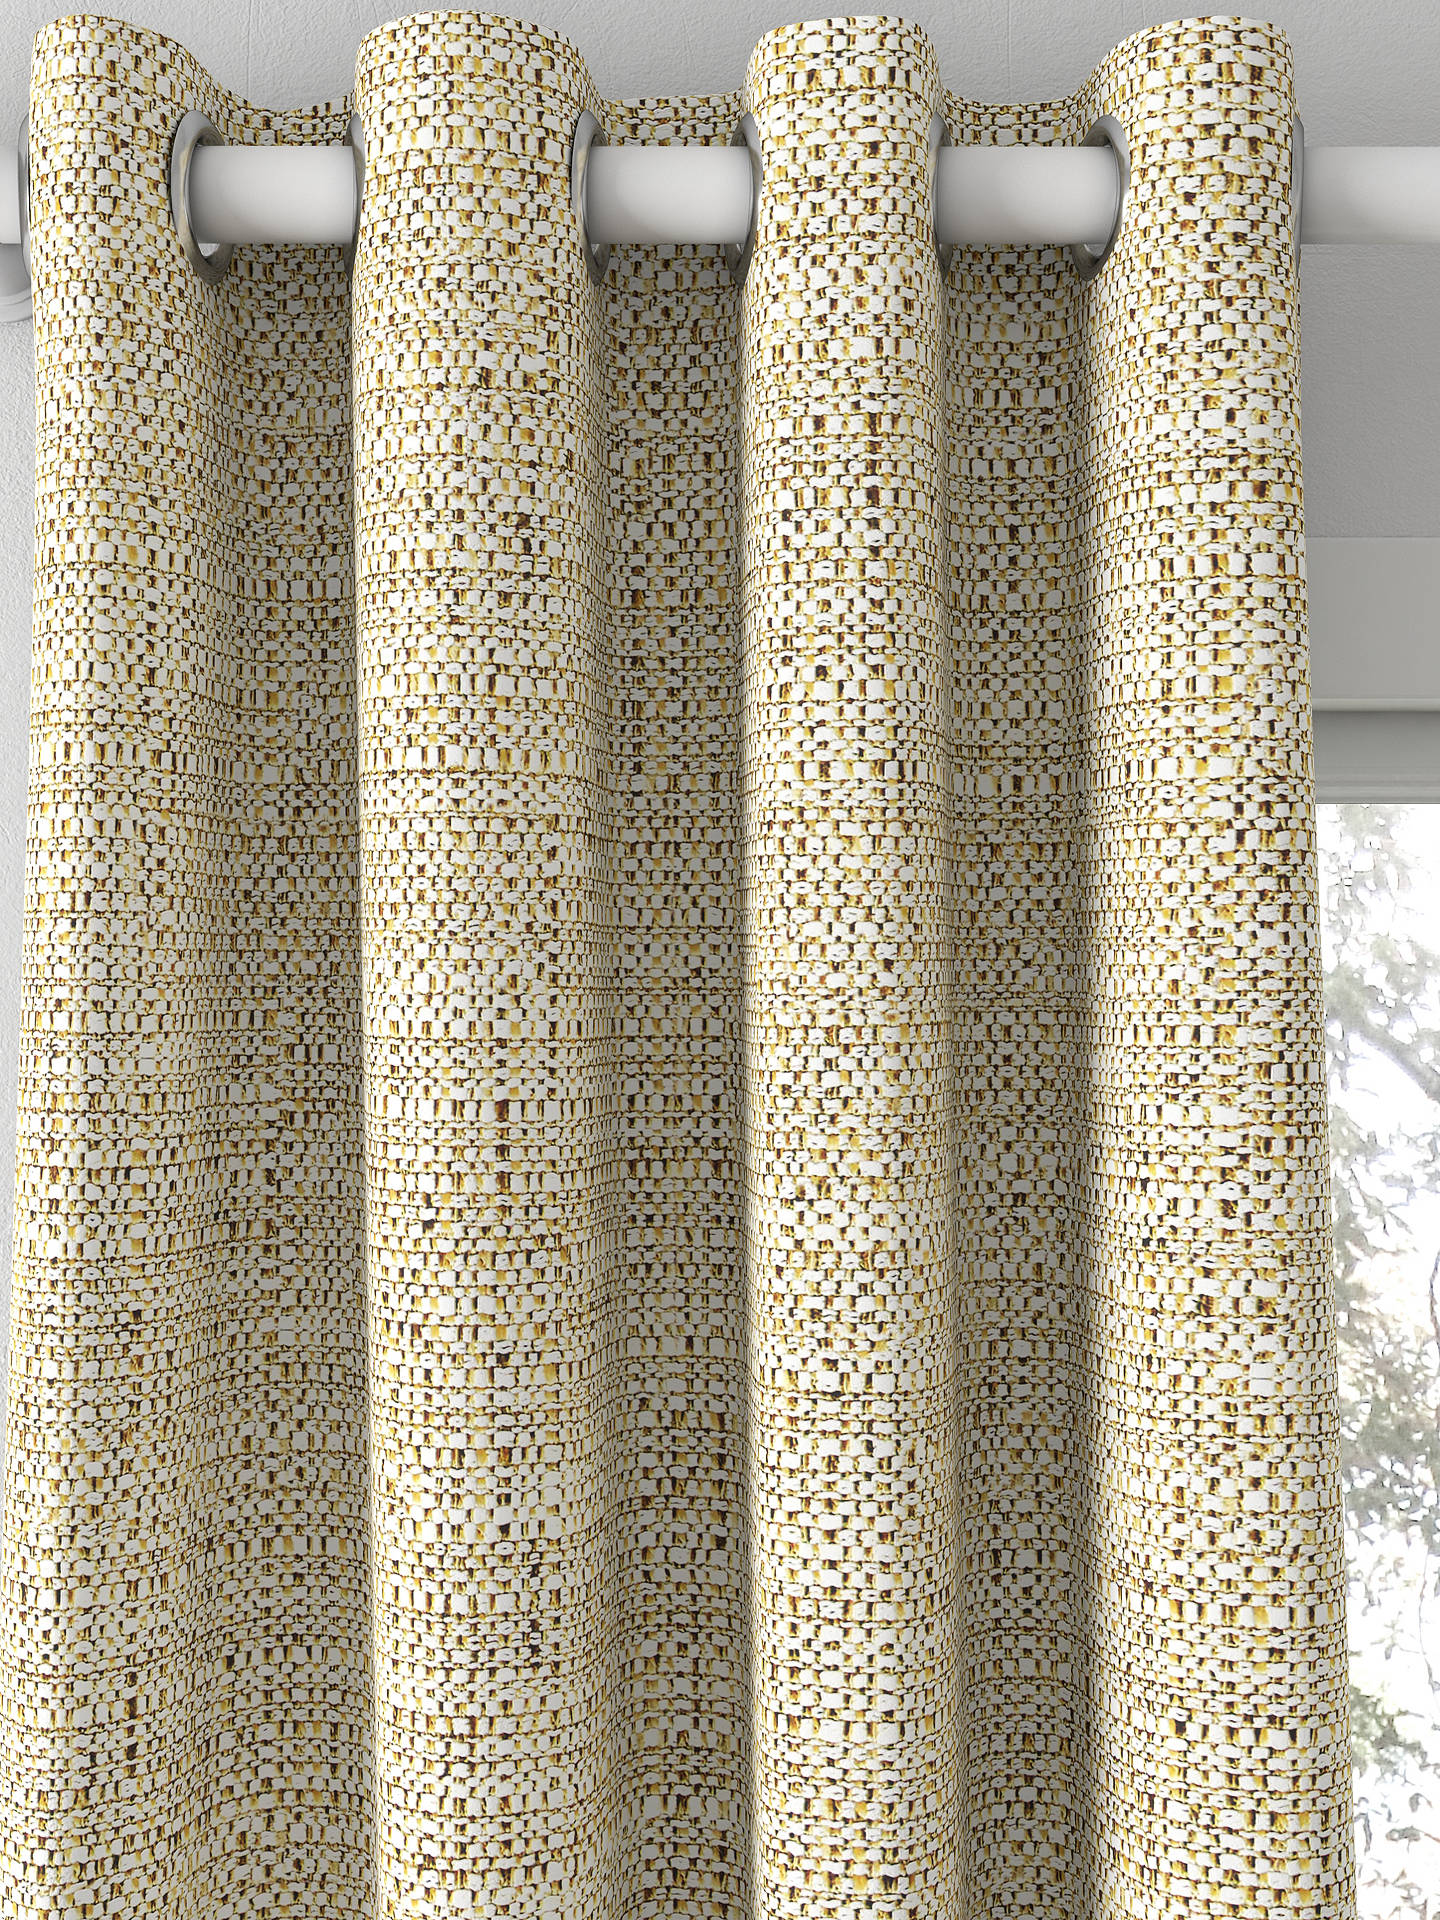 John Lewis Tonal Weave Made to Measure Curtains, Natural